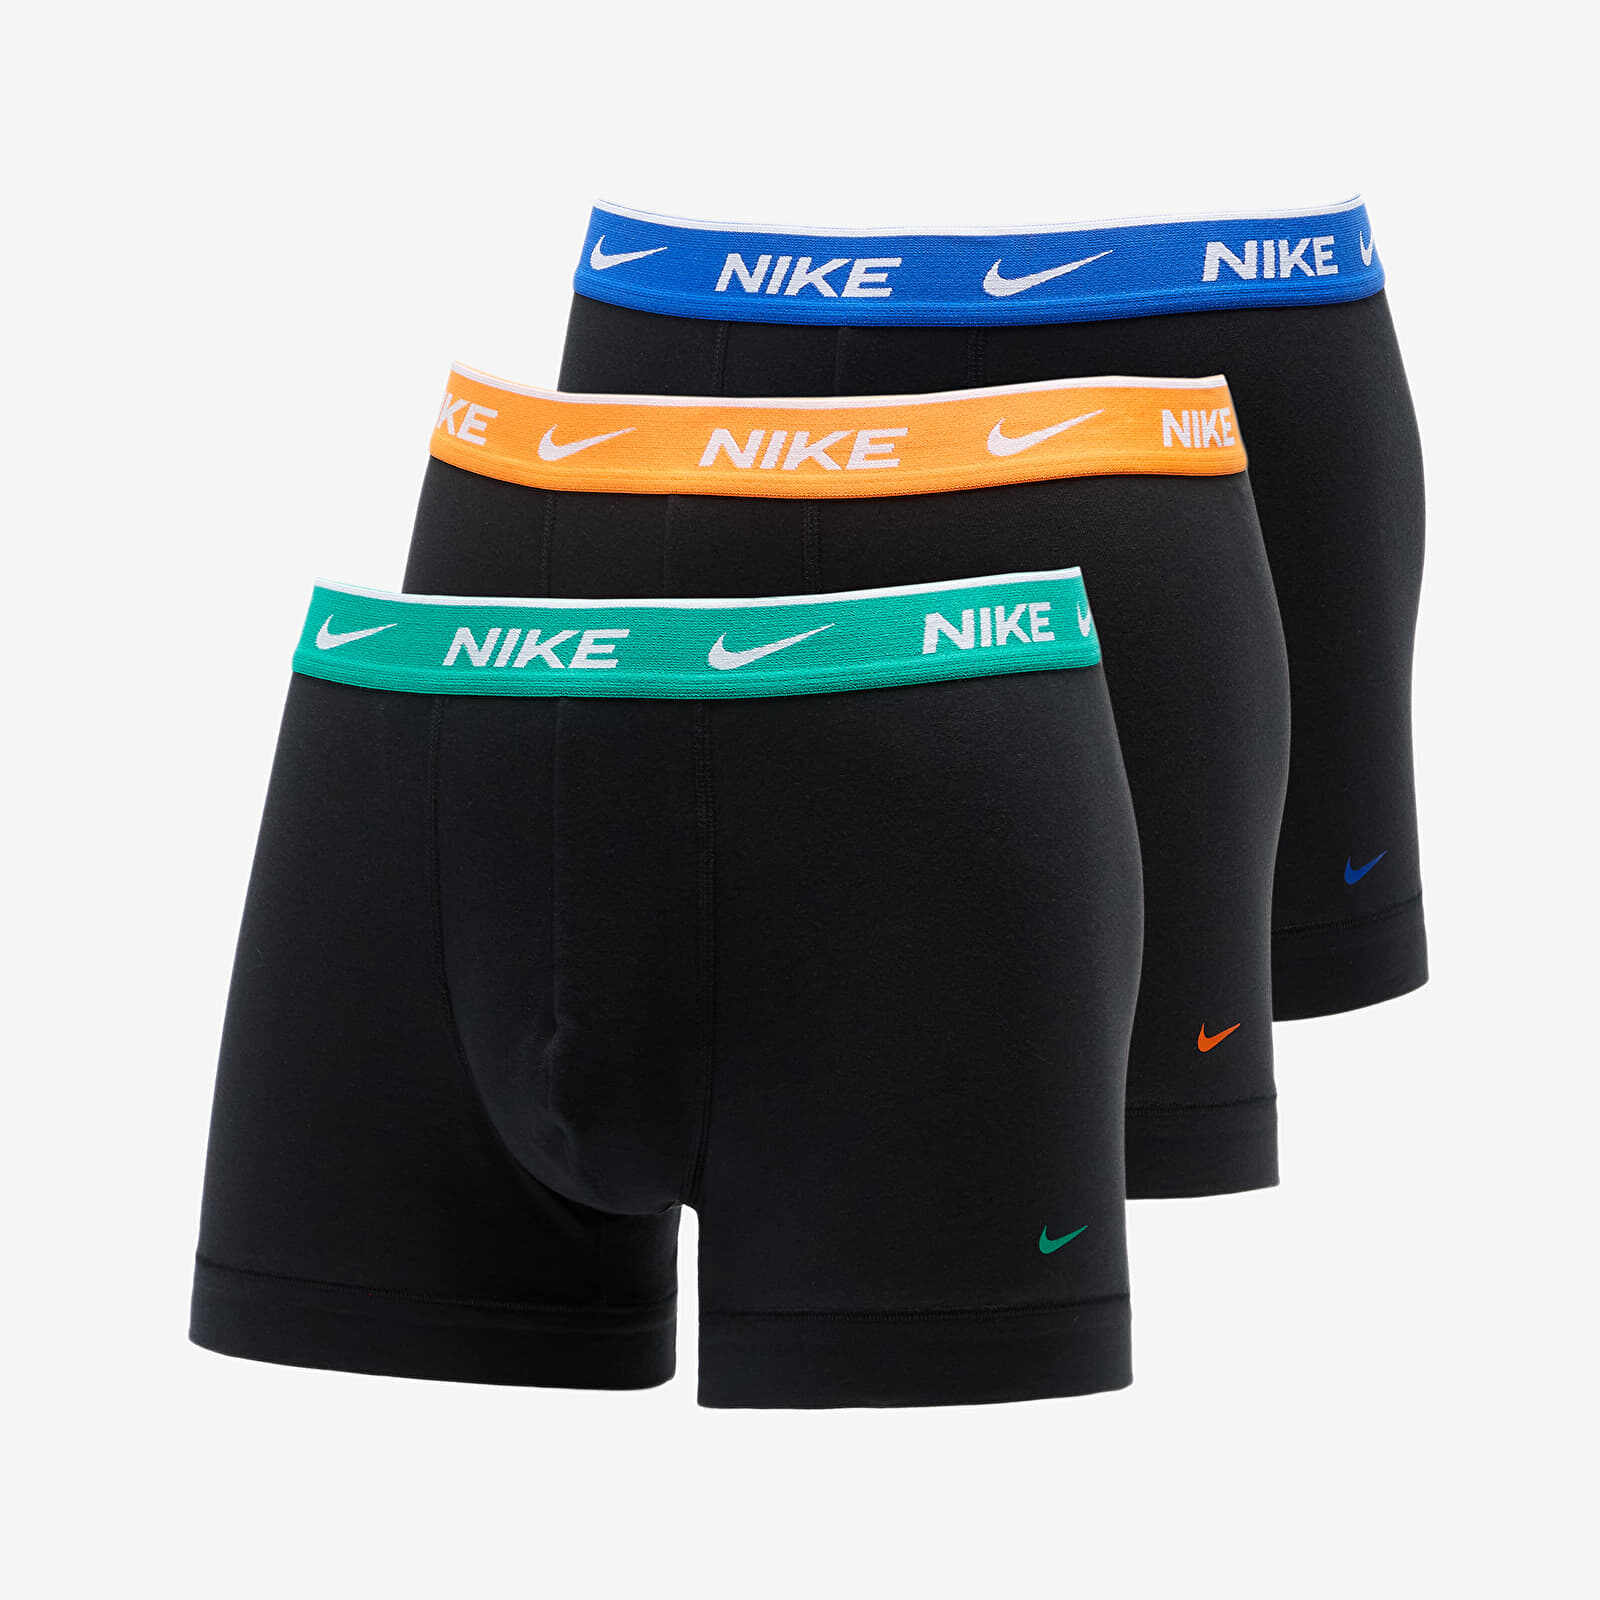 Nike Dri-FIT Everyday Cotton Stretch Trunk 3-Pack Black